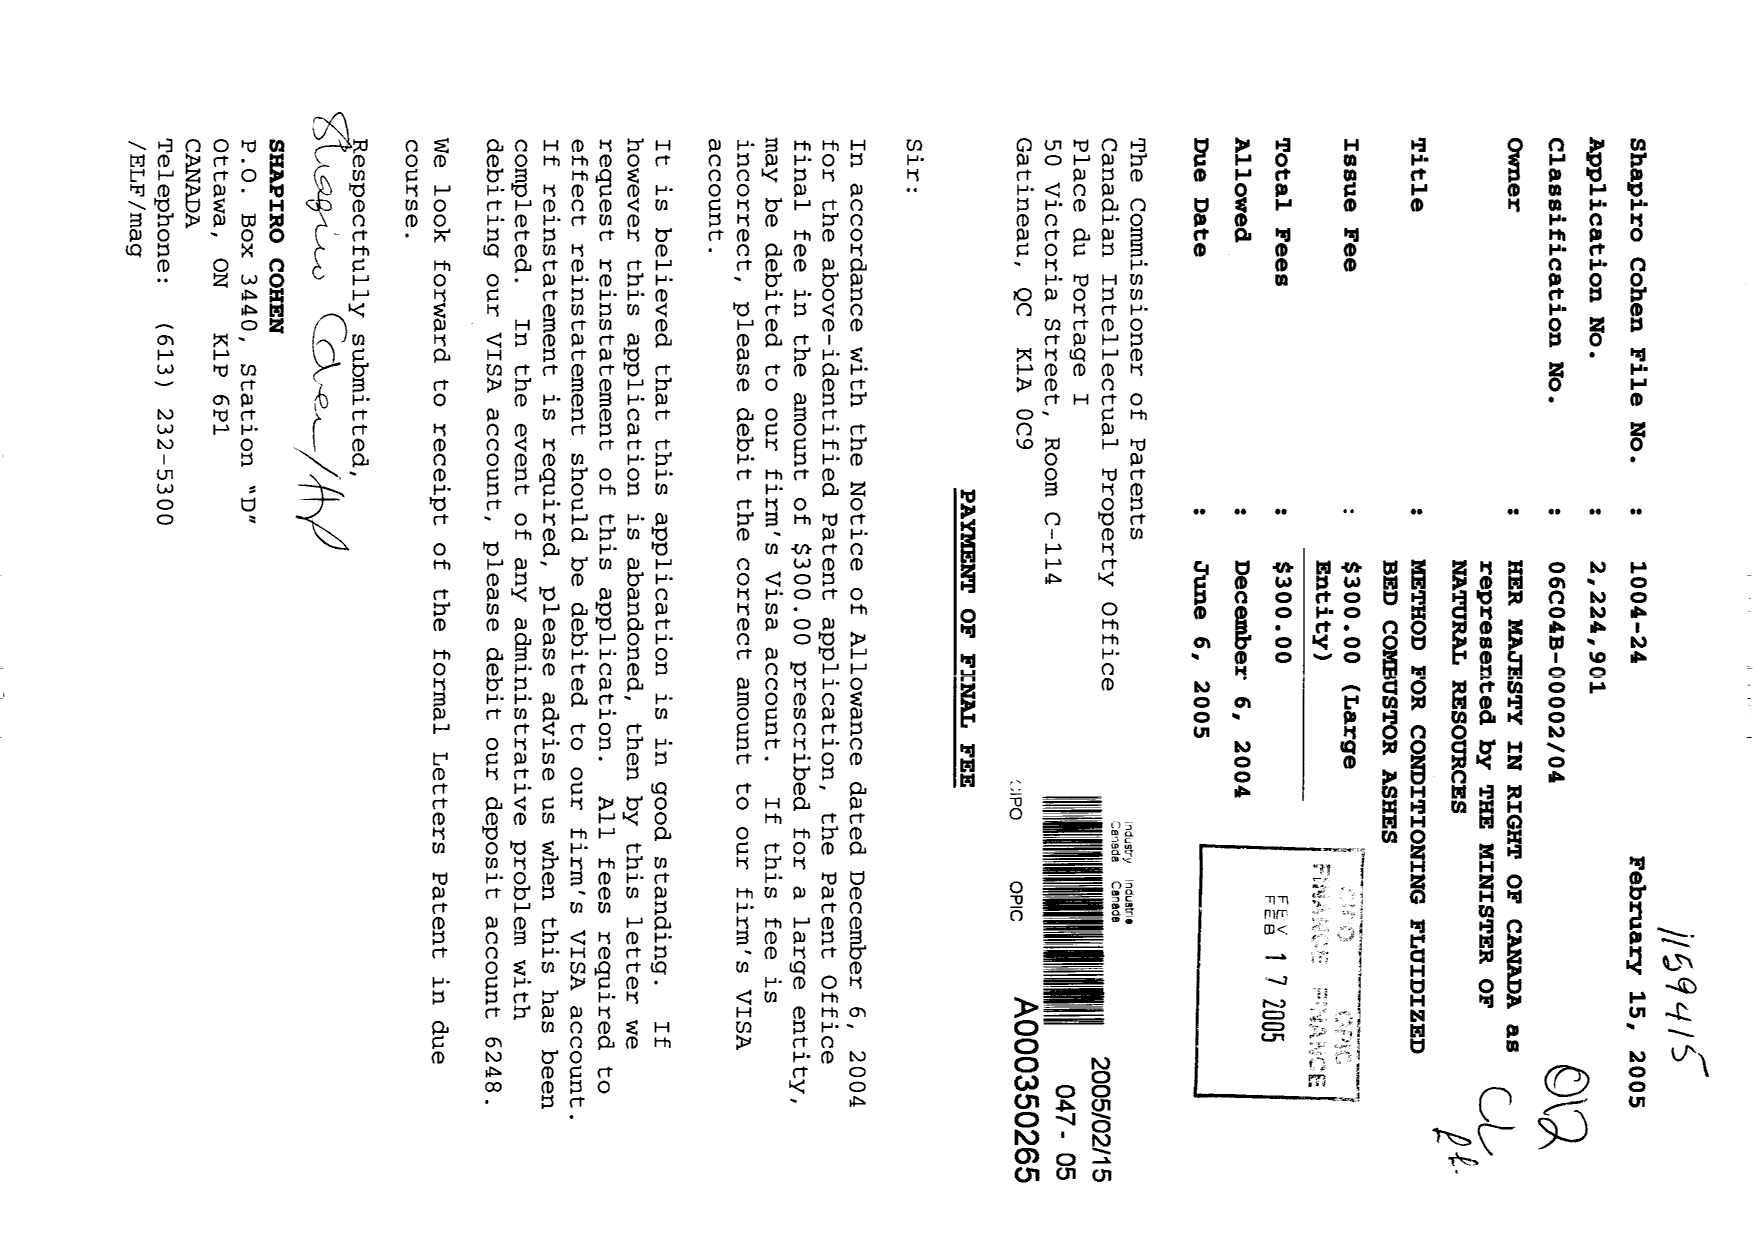 Canadian Patent Document 2224901. Correspondence 20041215. Image 1 of 1